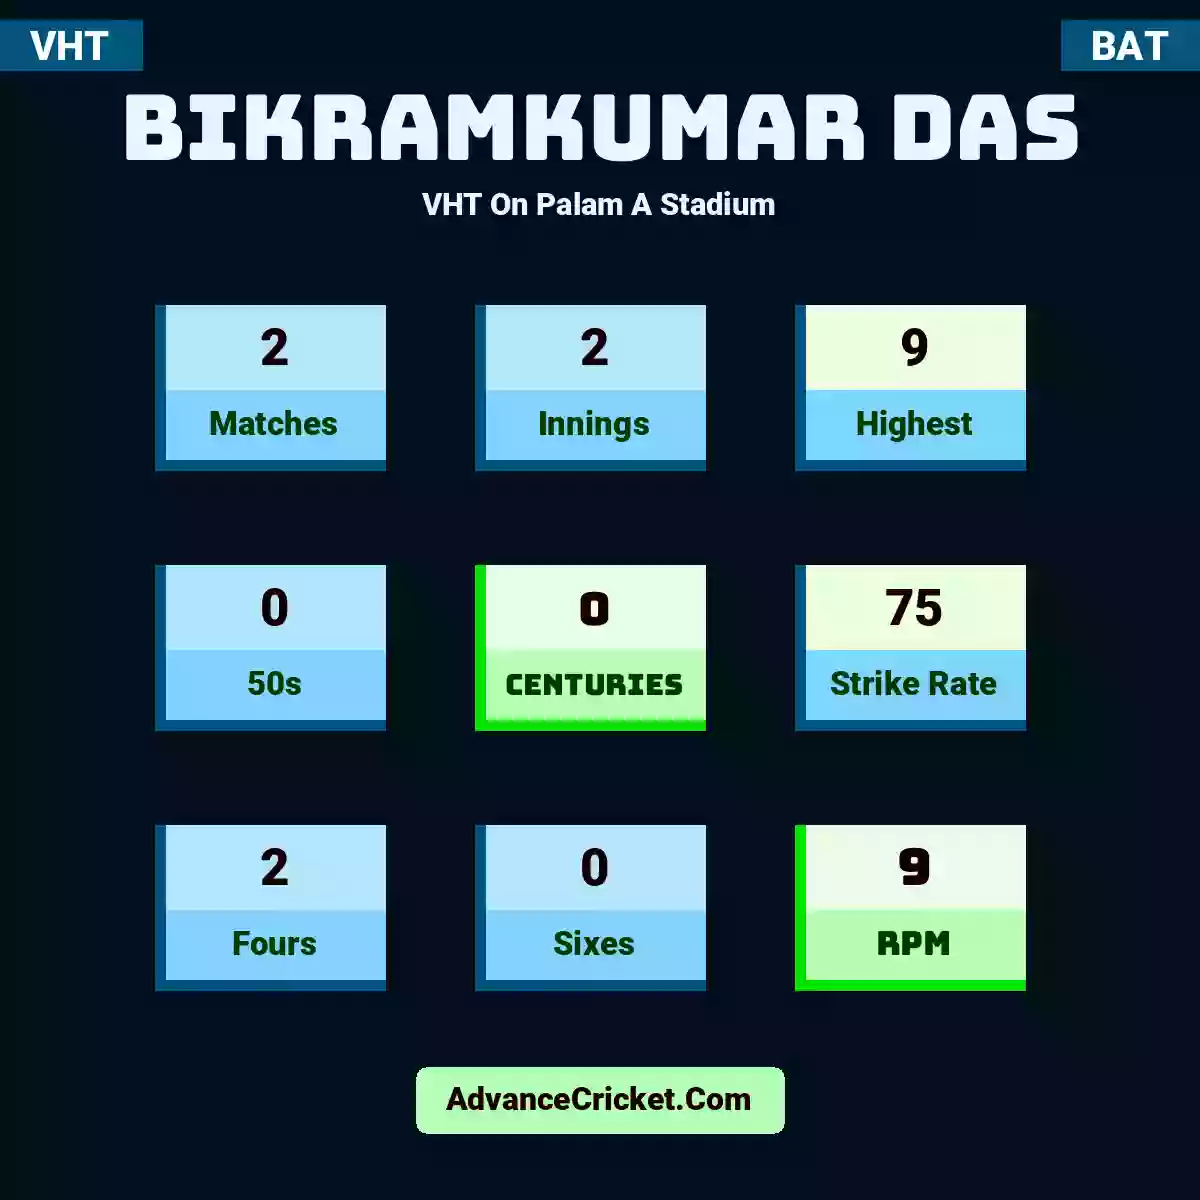 Bikramkumar Das VHT  On Palam A Stadium, Bikramkumar Das played 2 matches, scored 9 runs as highest, 0 half-centuries, and 0 centuries, with a strike rate of 75. B.Das hit 2 fours and 0 sixes, with an RPM of 9.